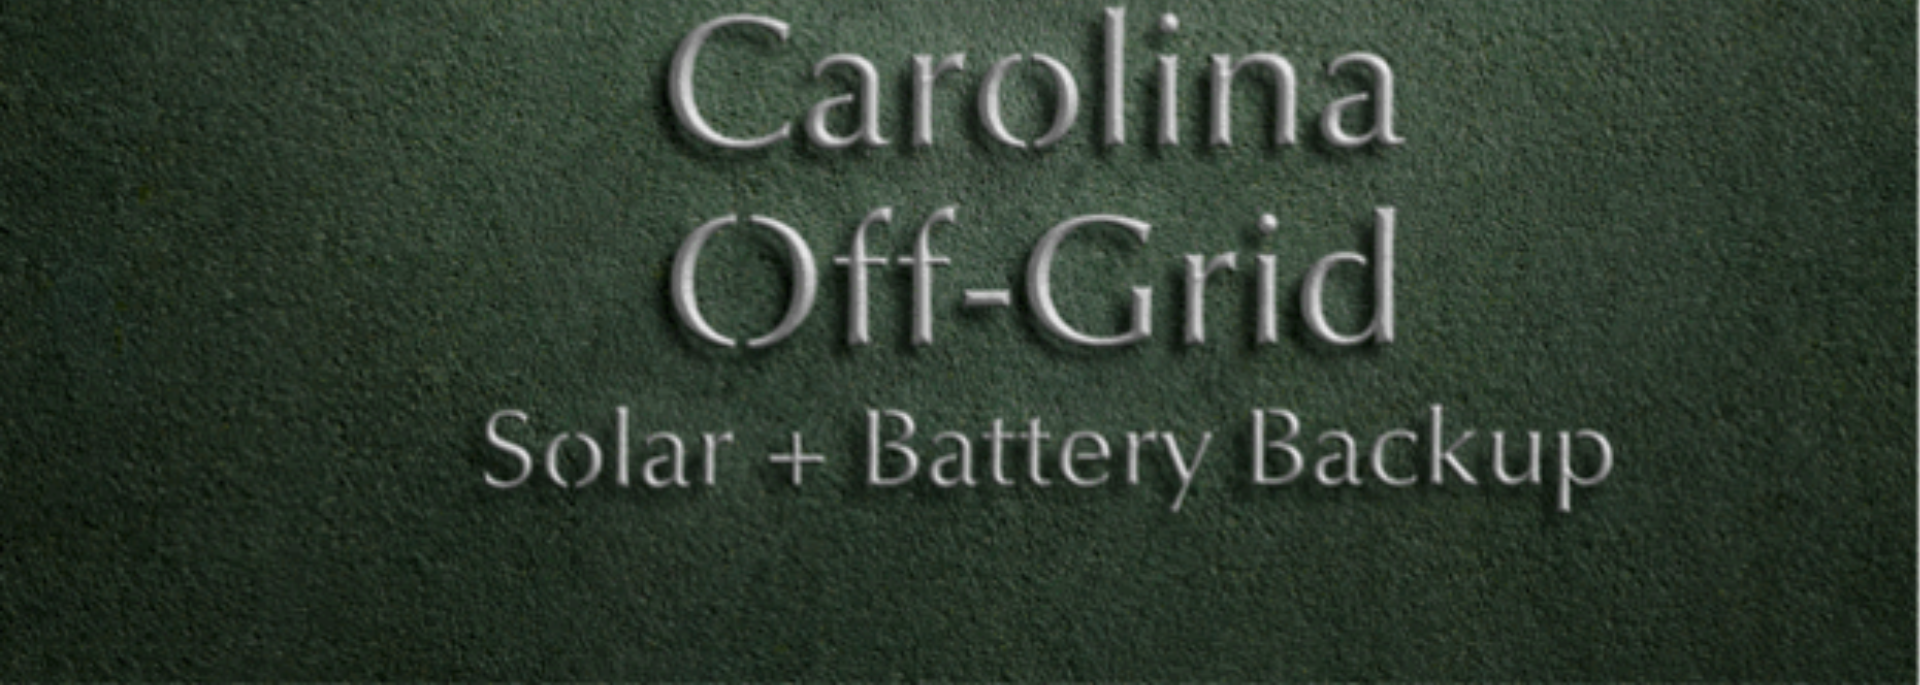 Carolina Off Grid channel